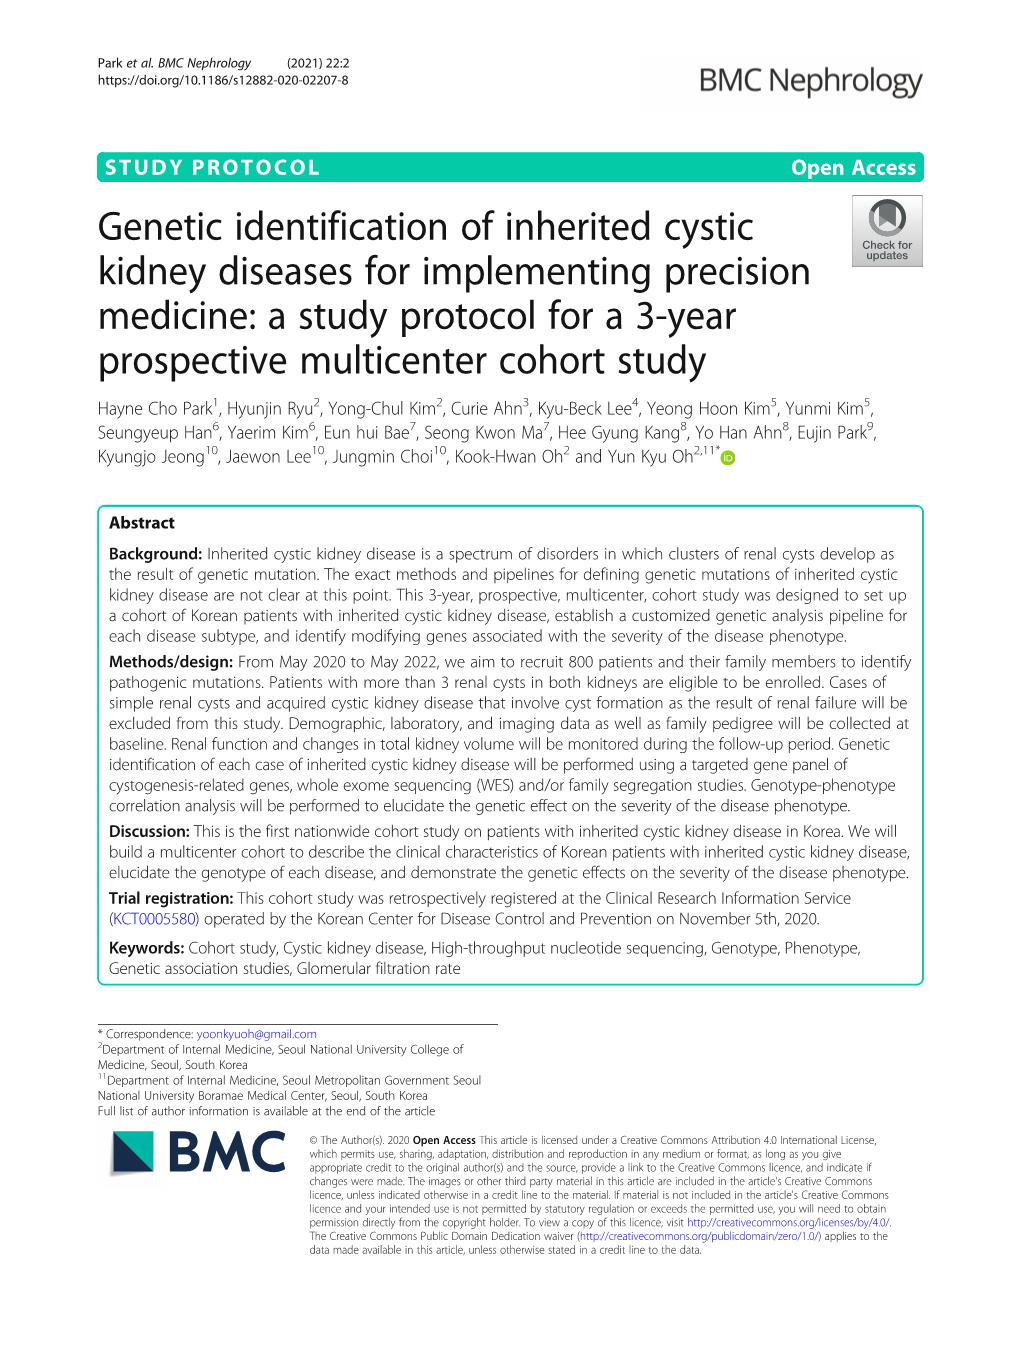 Genetic Identification of Inherited Cystic Kidney